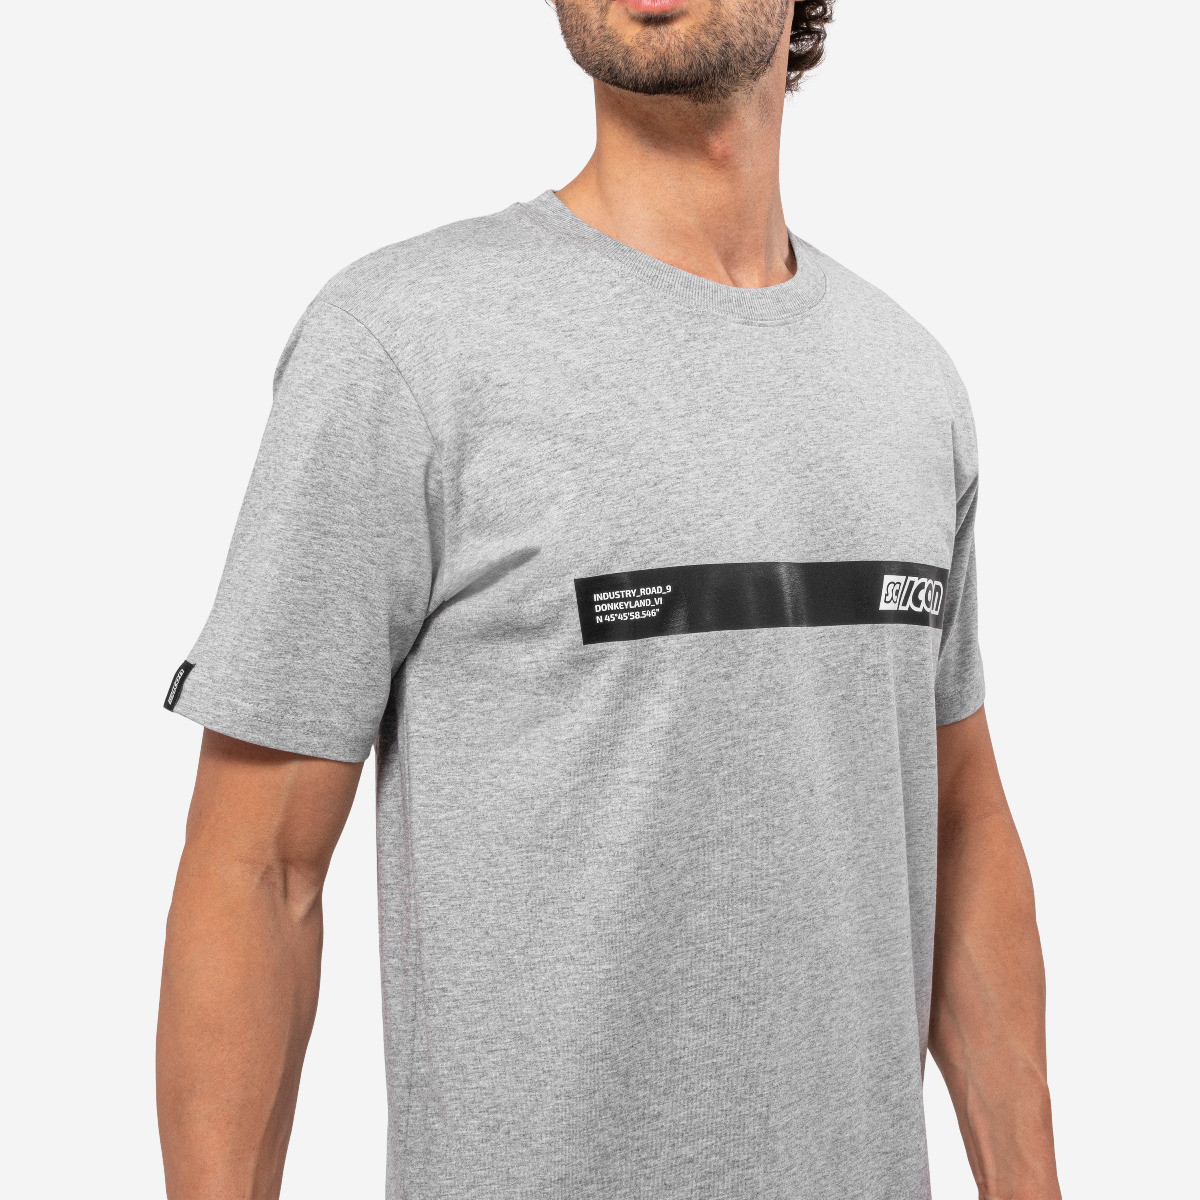 Scicon Sports | Stripe Logo Lifestyle Cotton T-shirt - Grey - TS61834